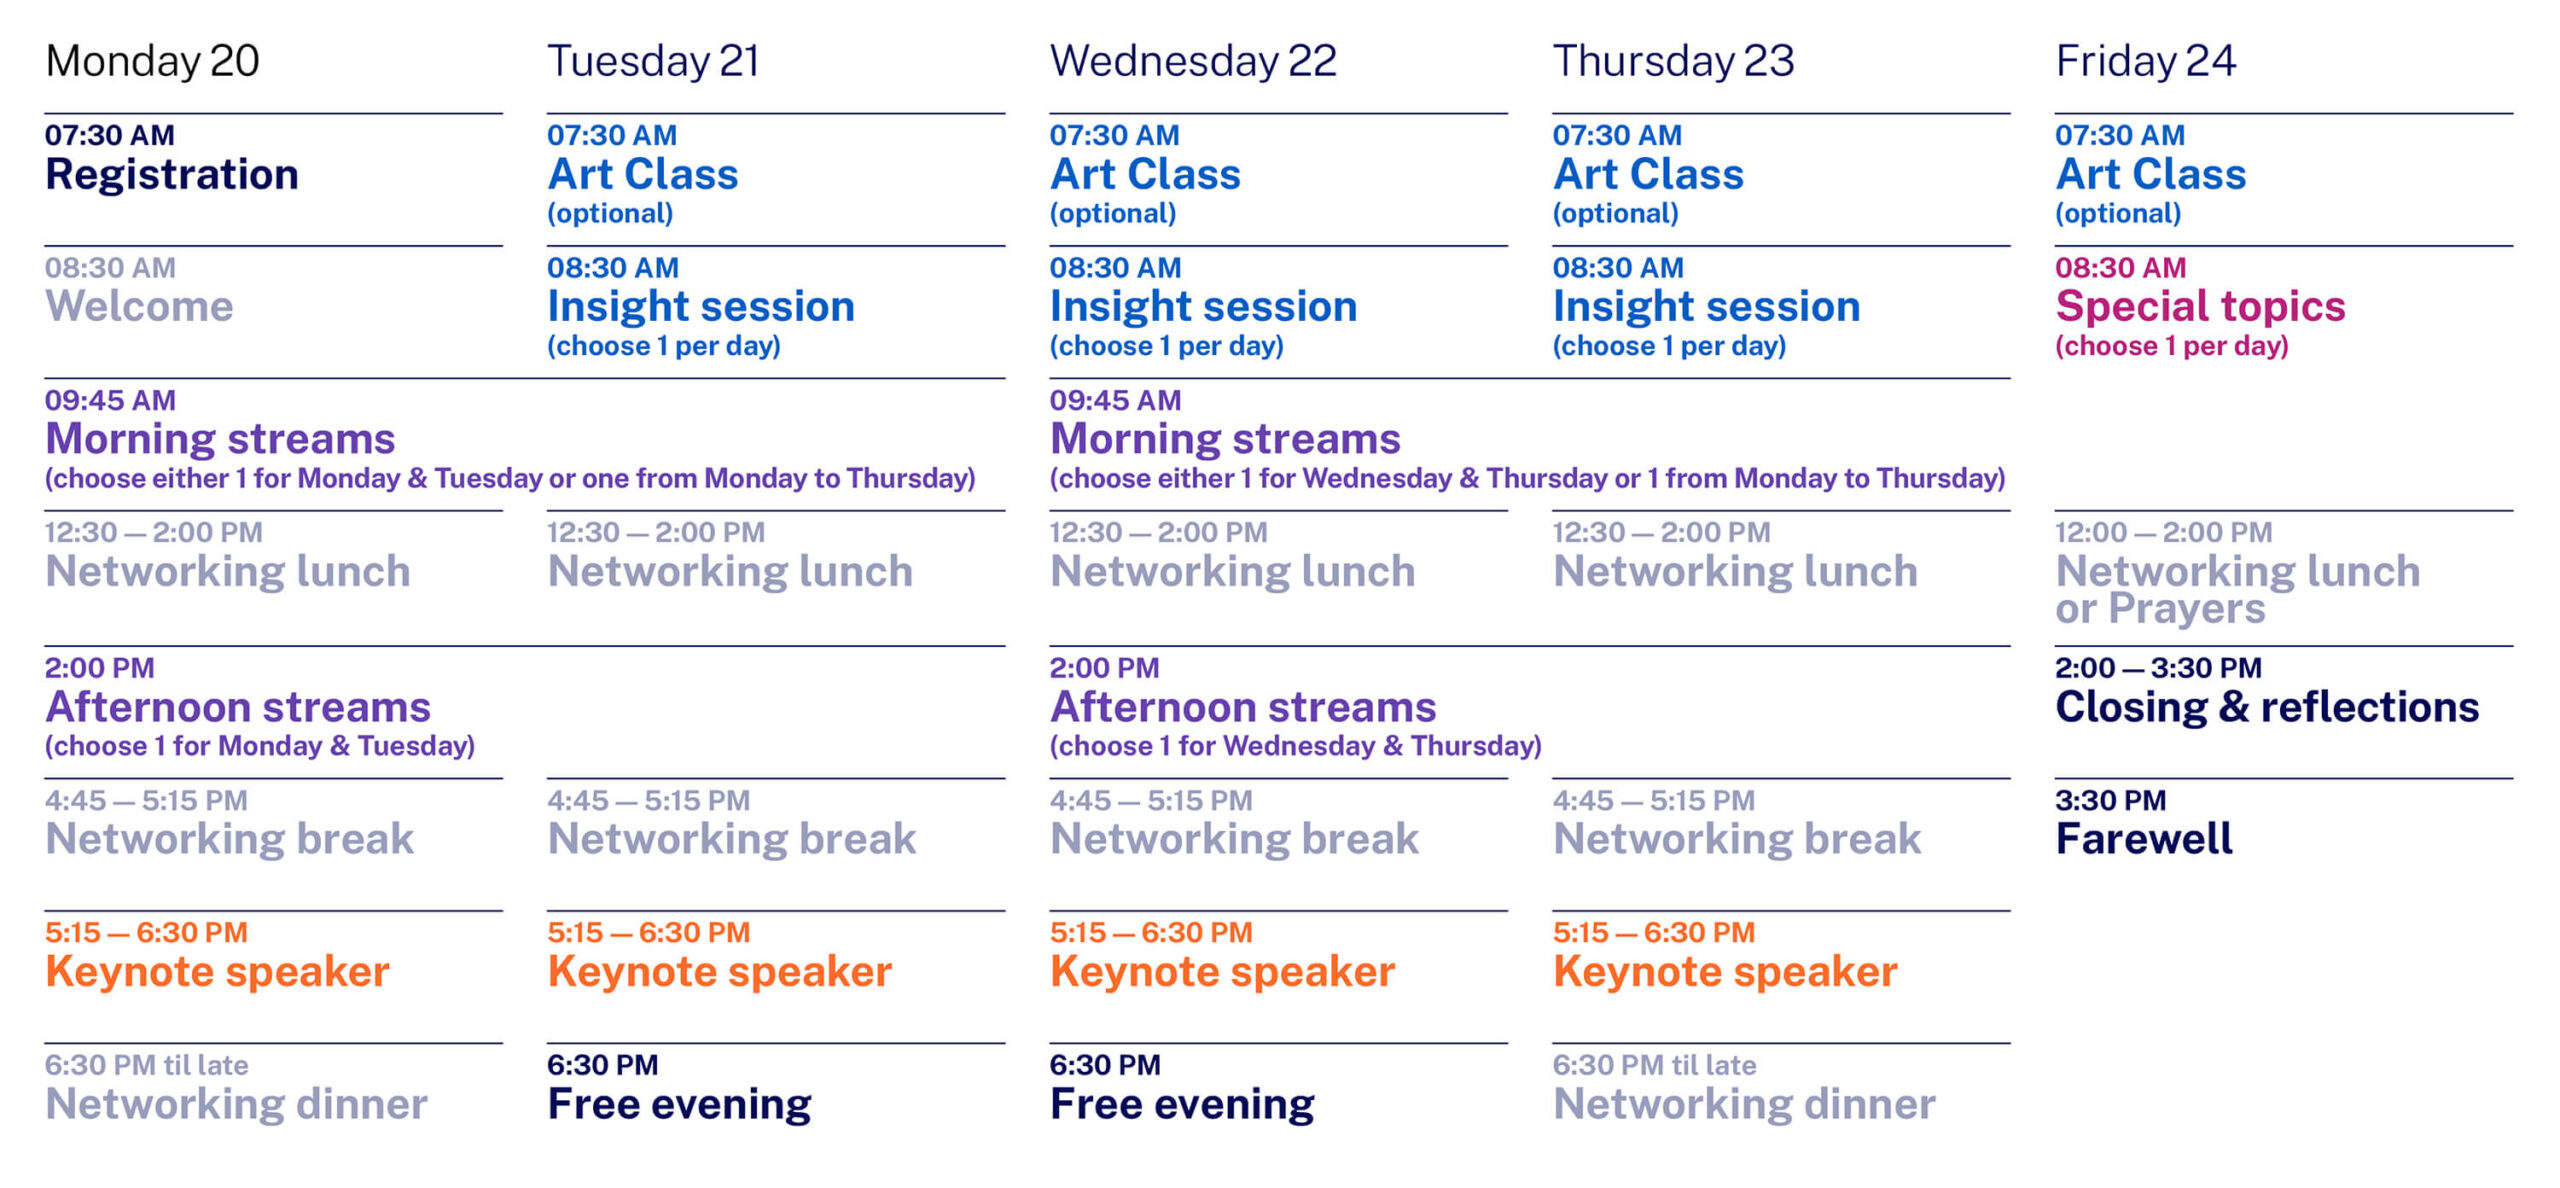 OWP Singapore program schedule